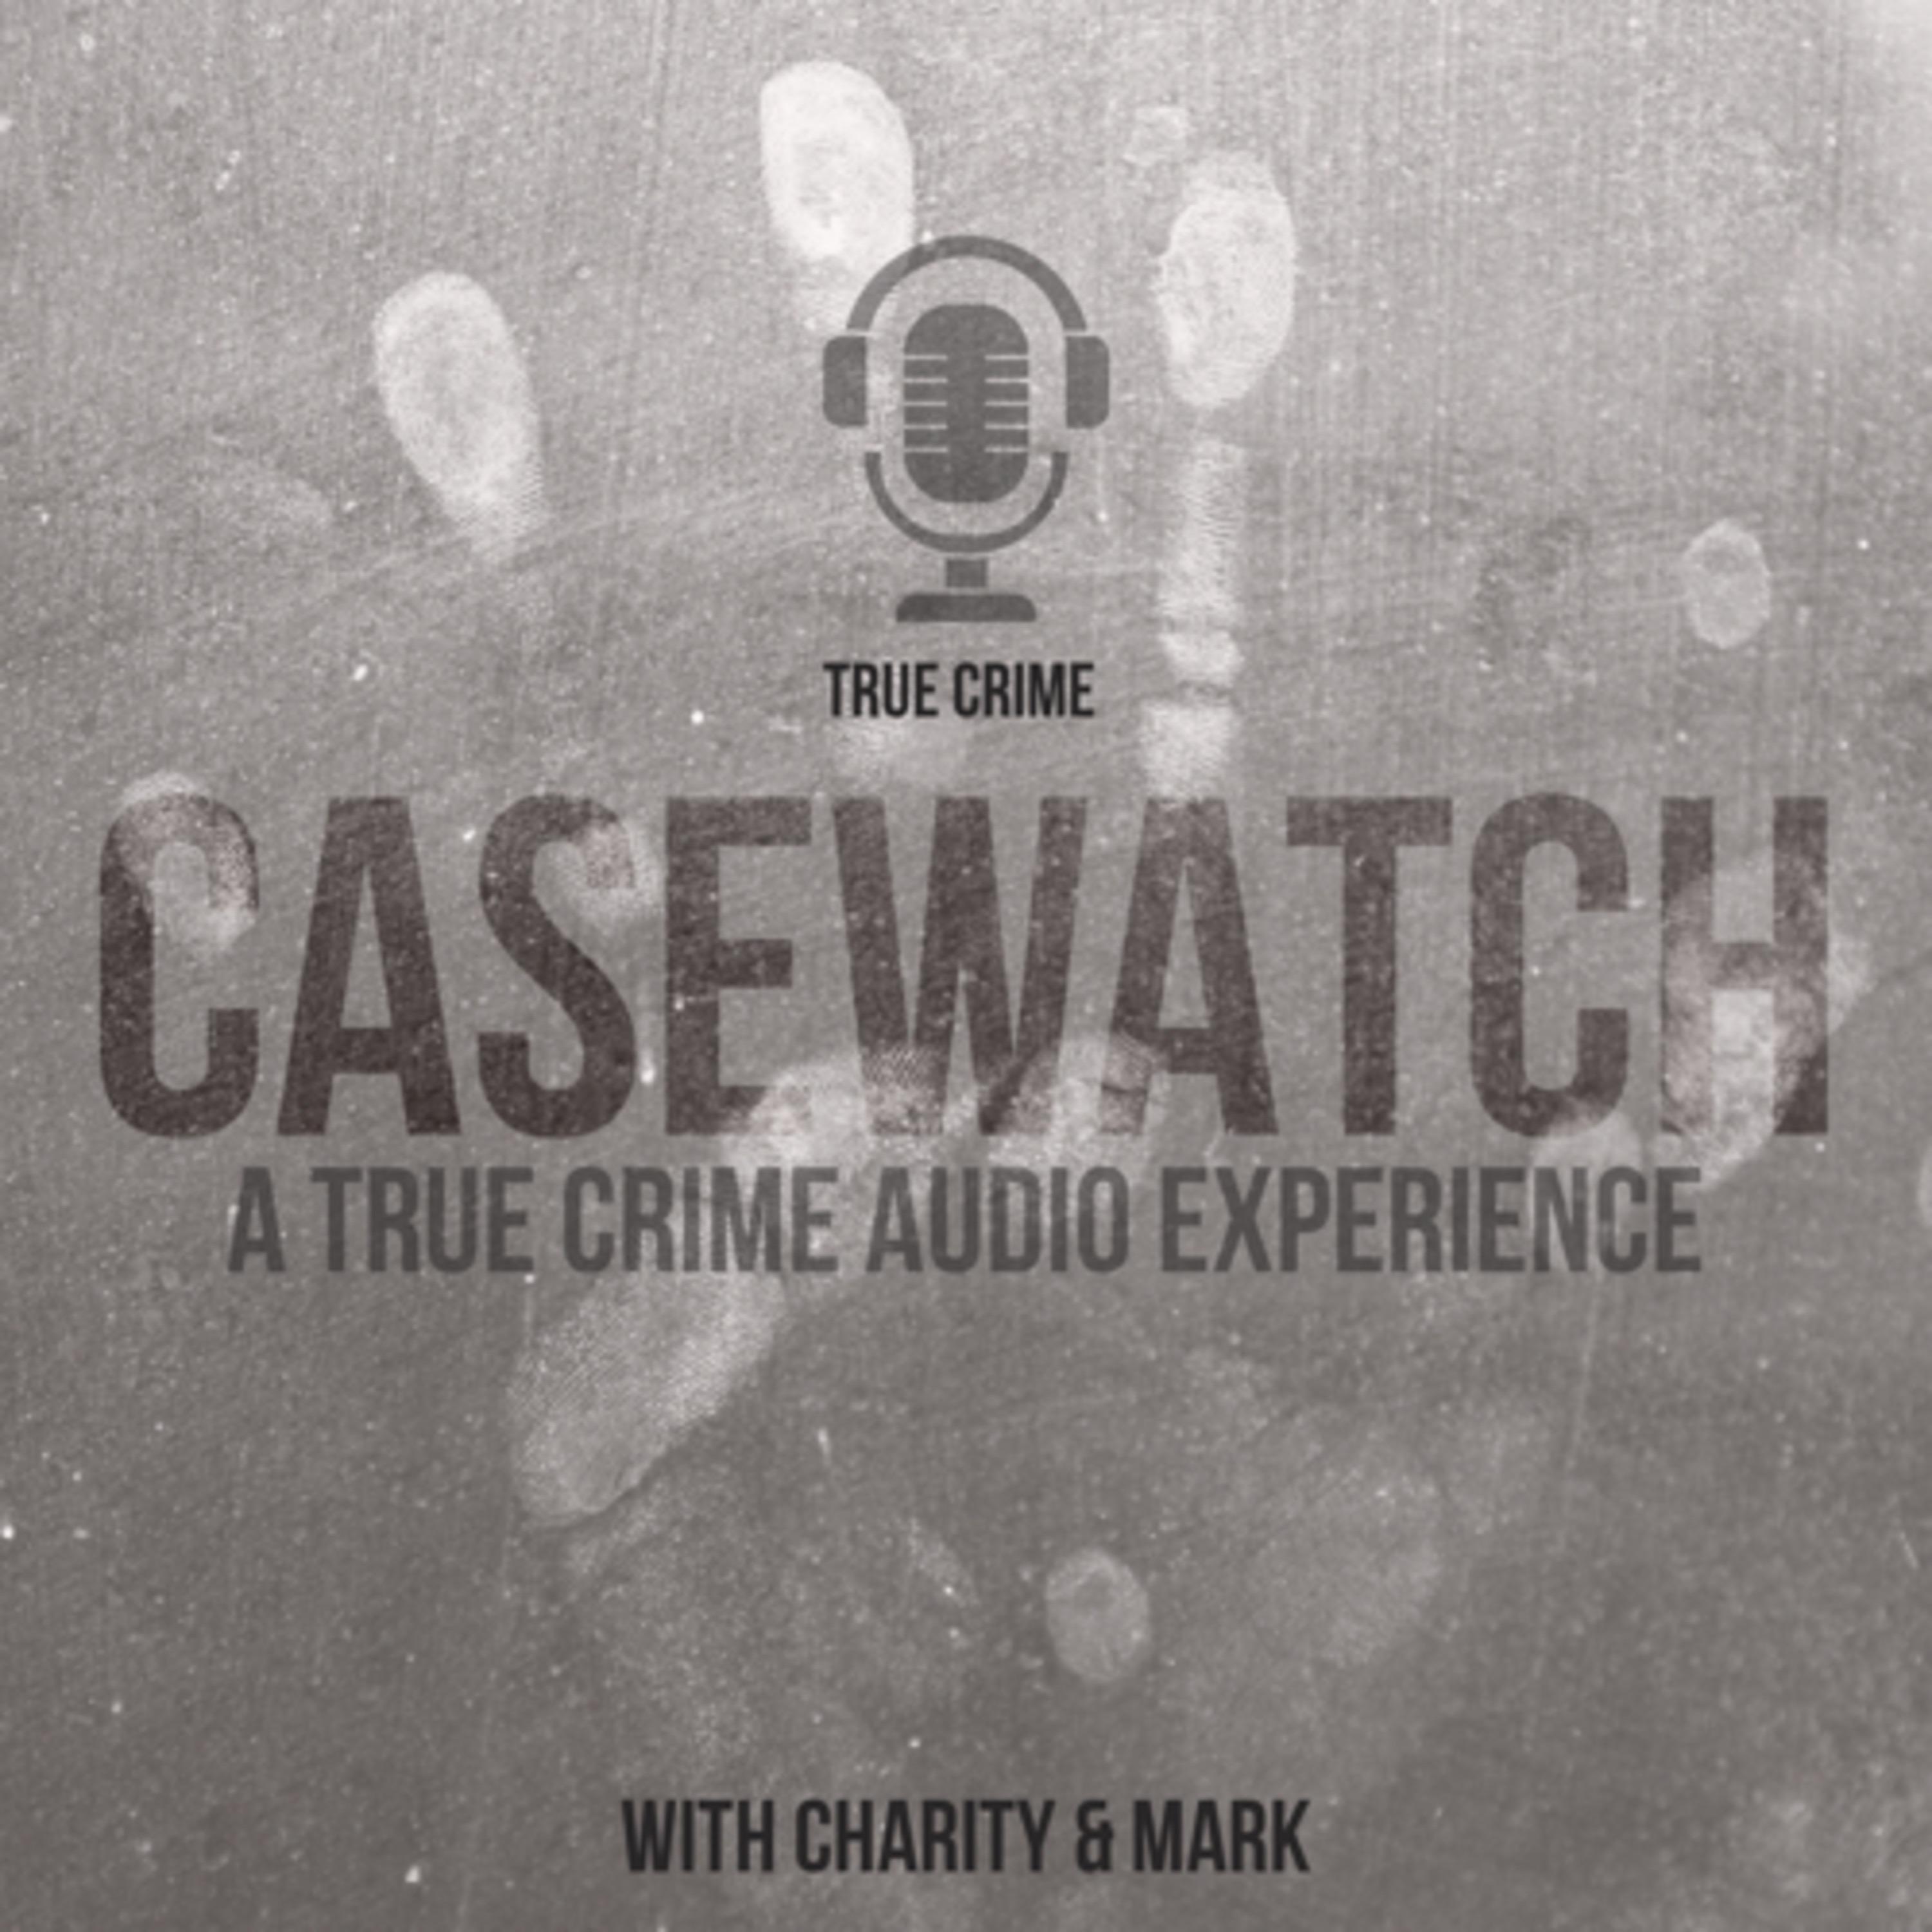 CASEWATCH True Crime Podcast